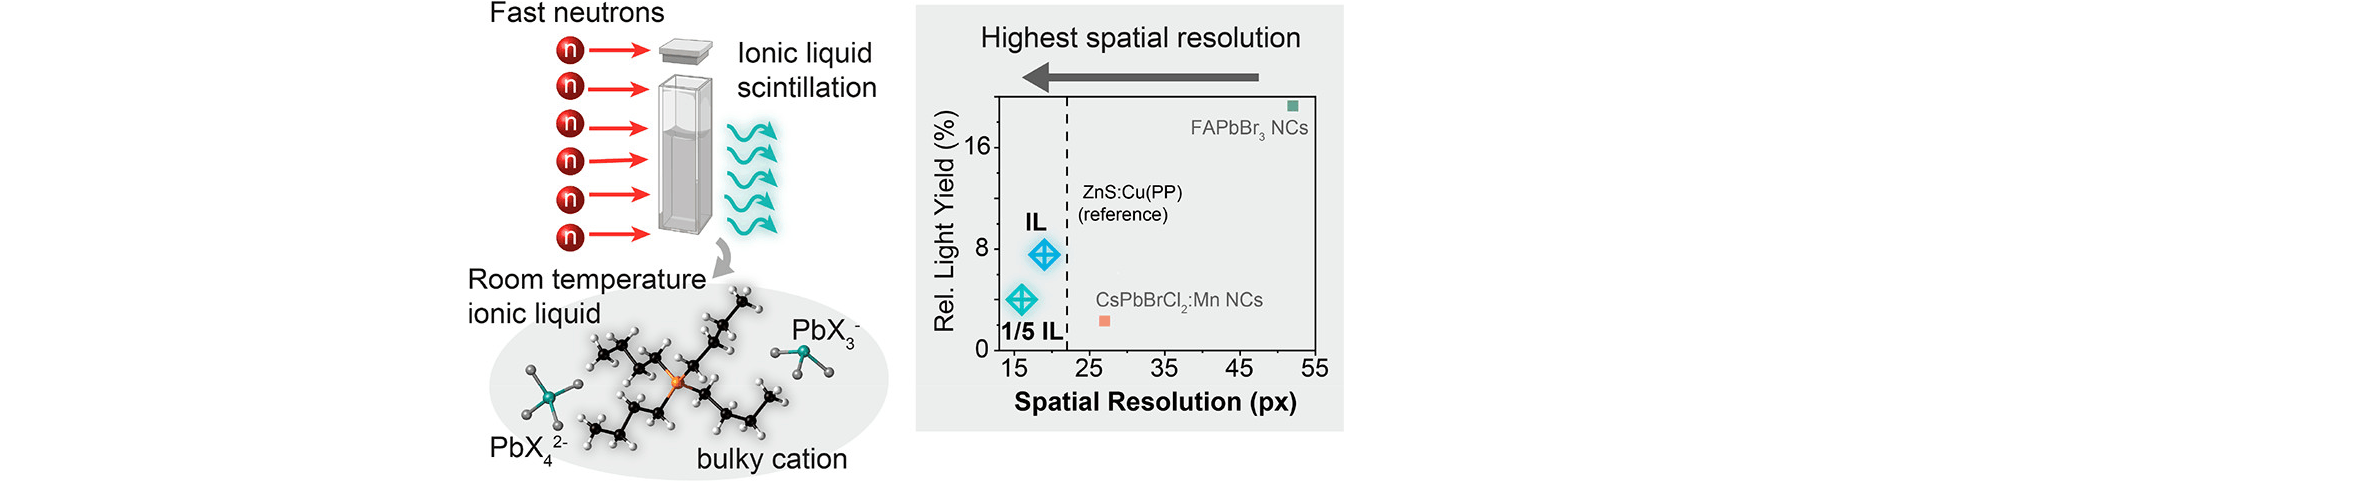 Luminescent Lead Halide Ionic Liquids for High-​Spatial-Resolution Fast Neutron Imaging